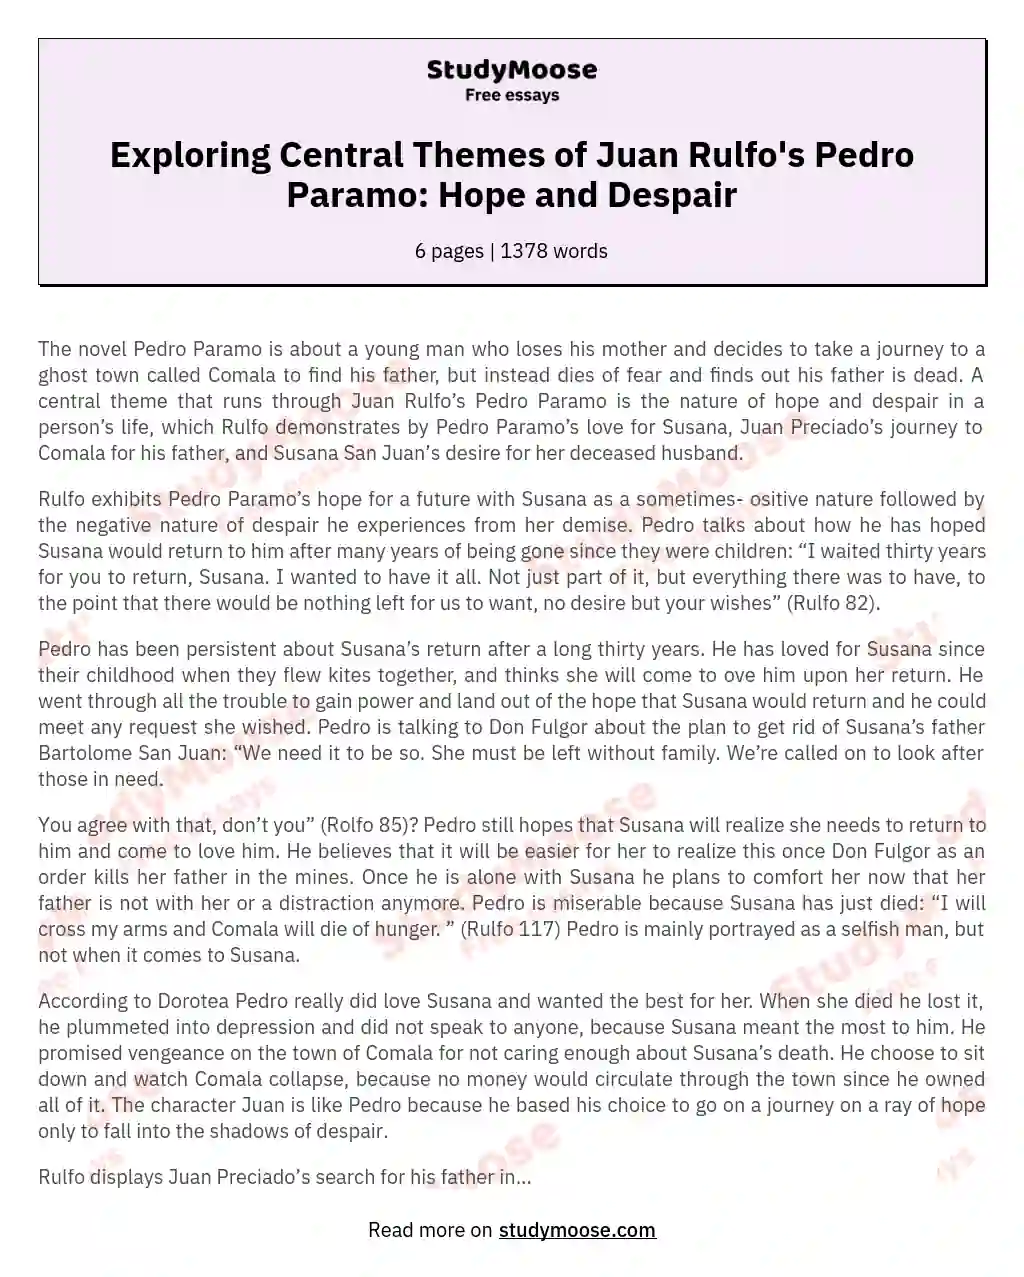 Exploring Central Themes of Juan Rulfo's Pedro Paramo: Hope and Despair essay